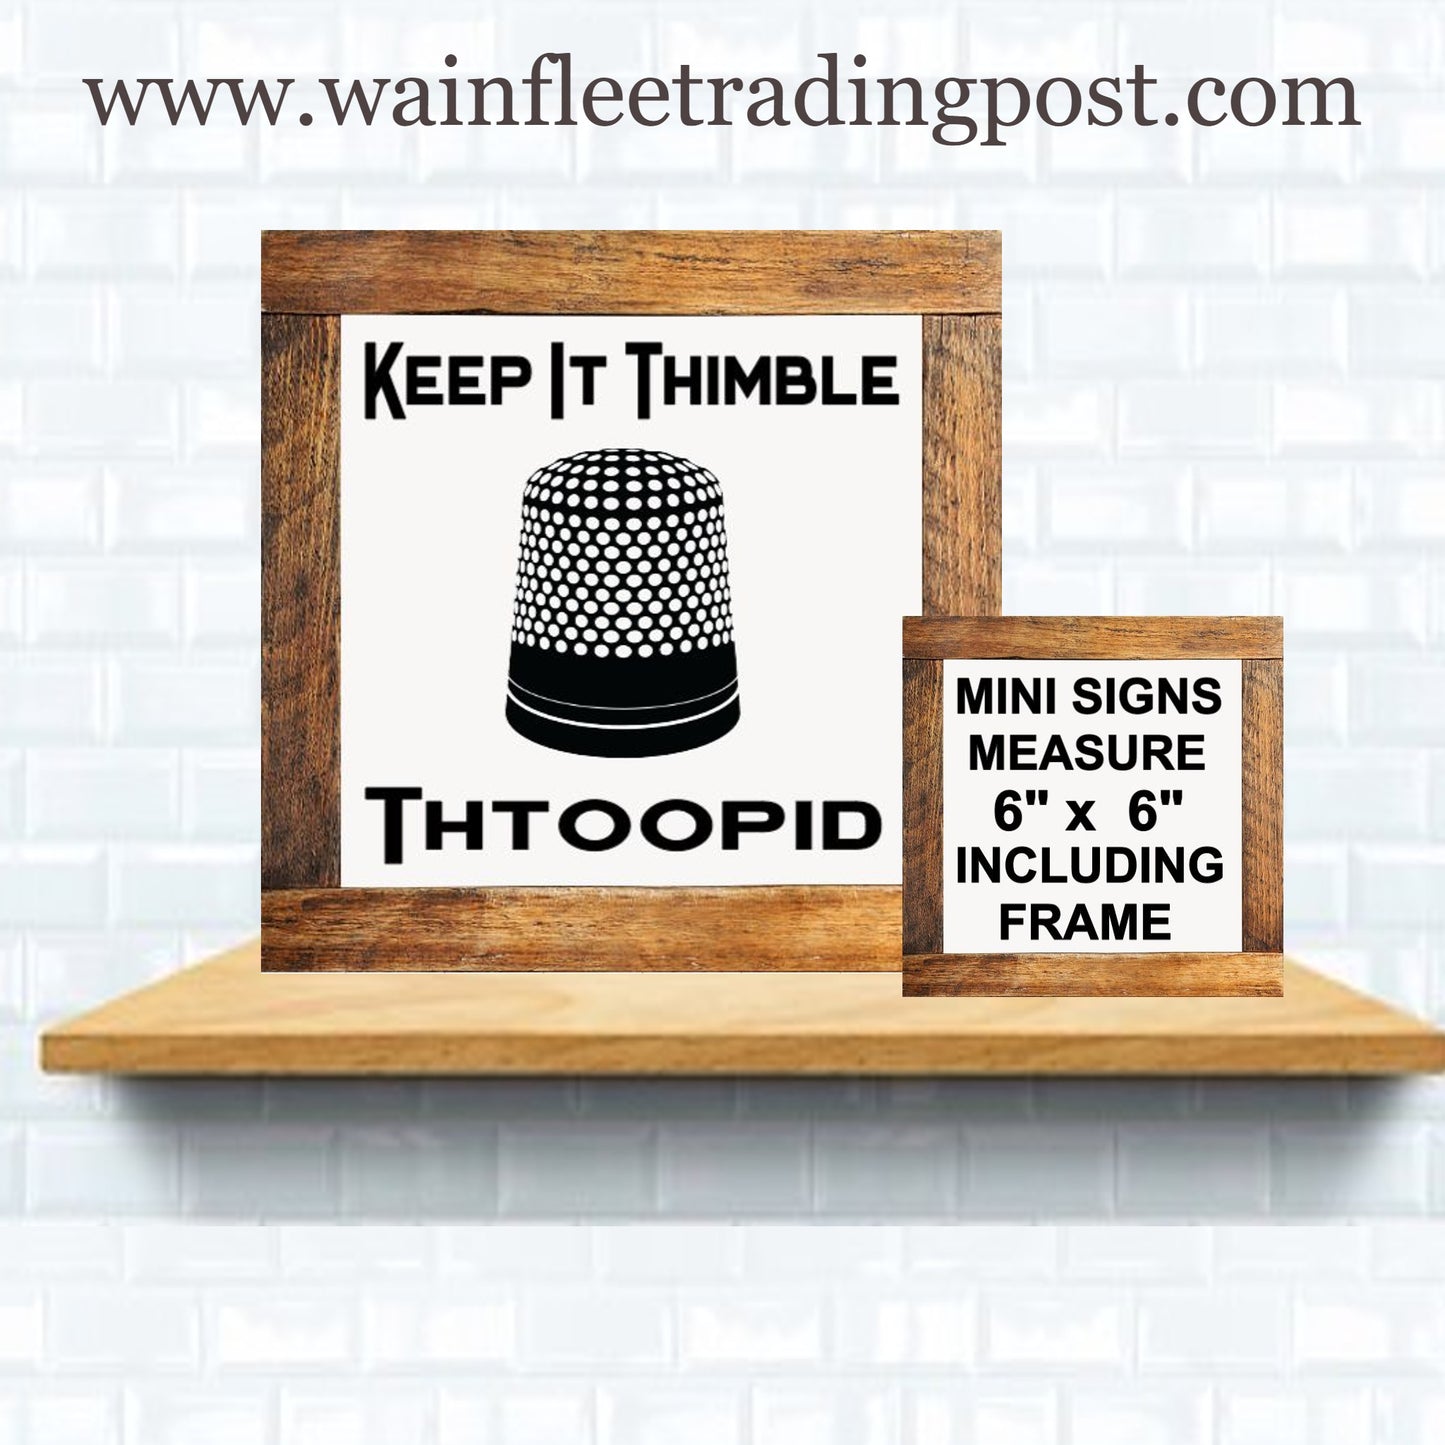 mini sign original design keep it thimble thtoopid